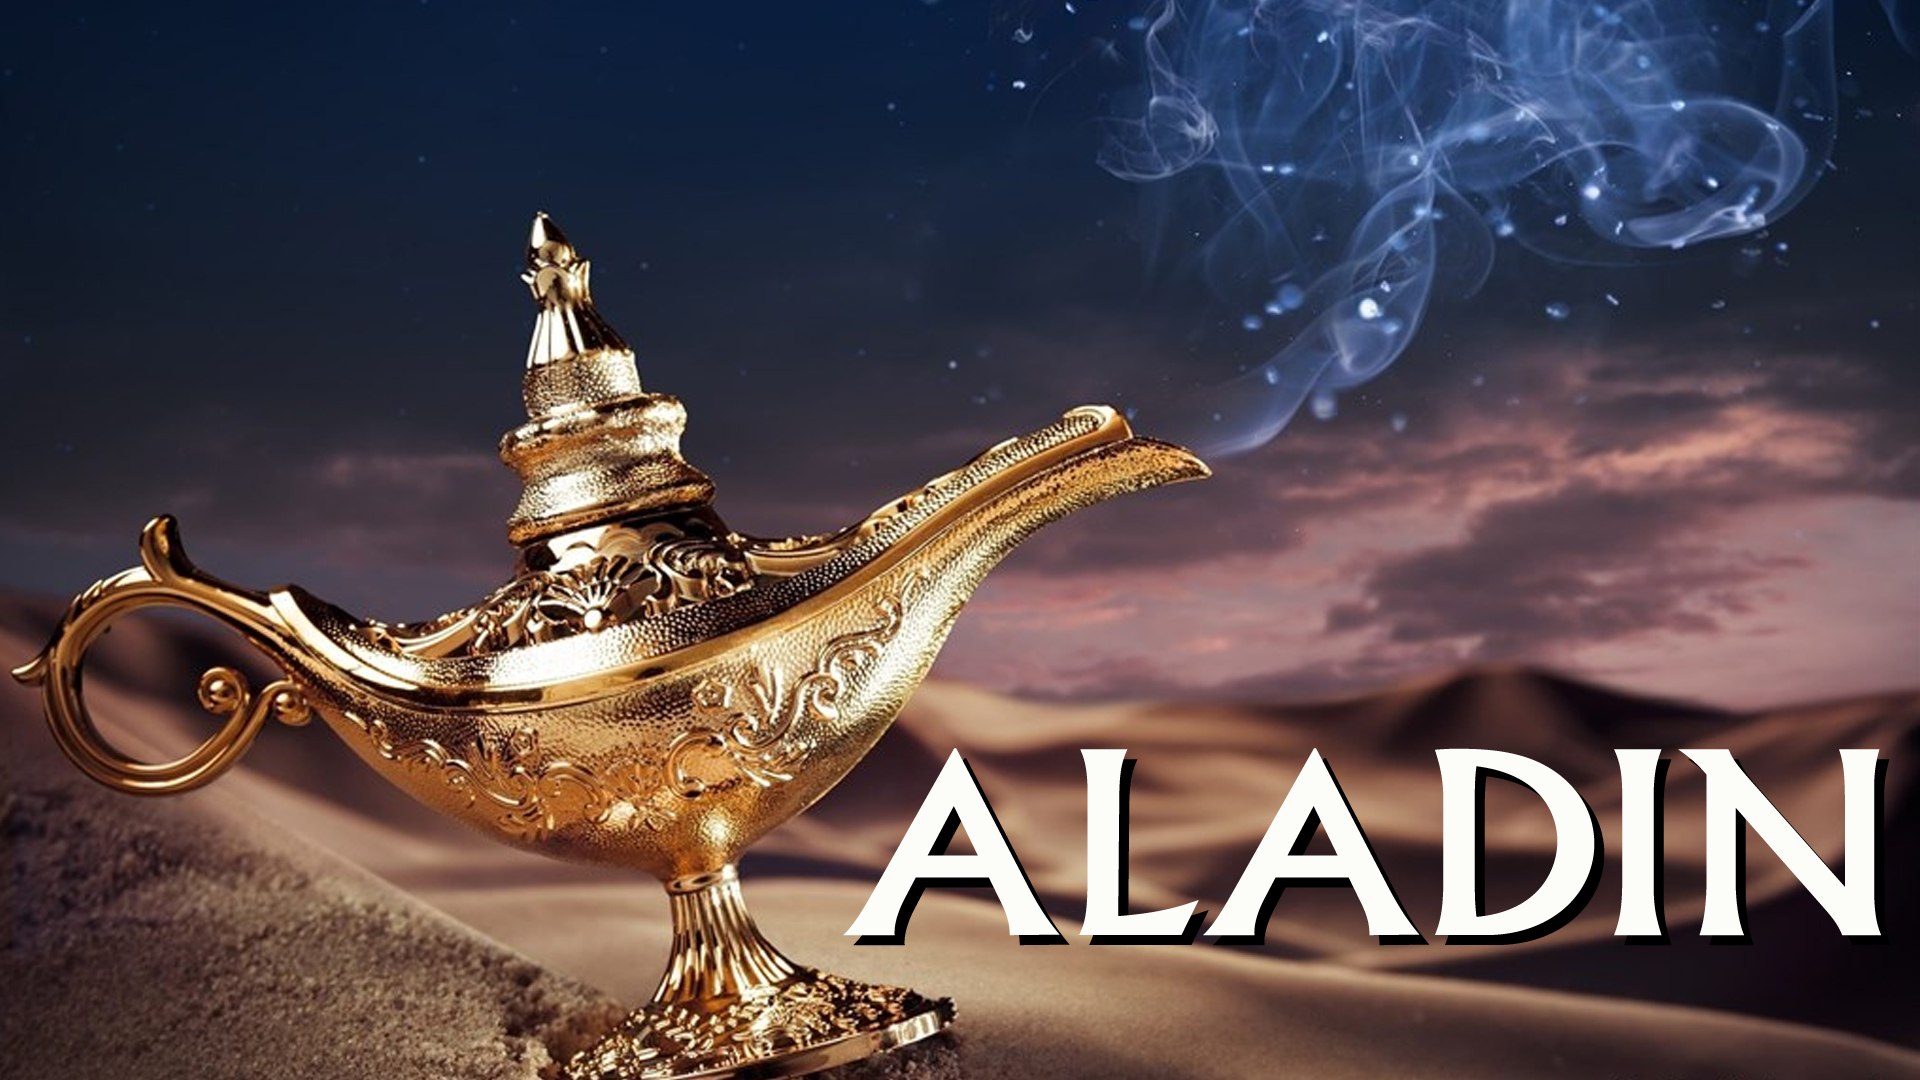 Download film aladdin subtitle bahasa indonesia